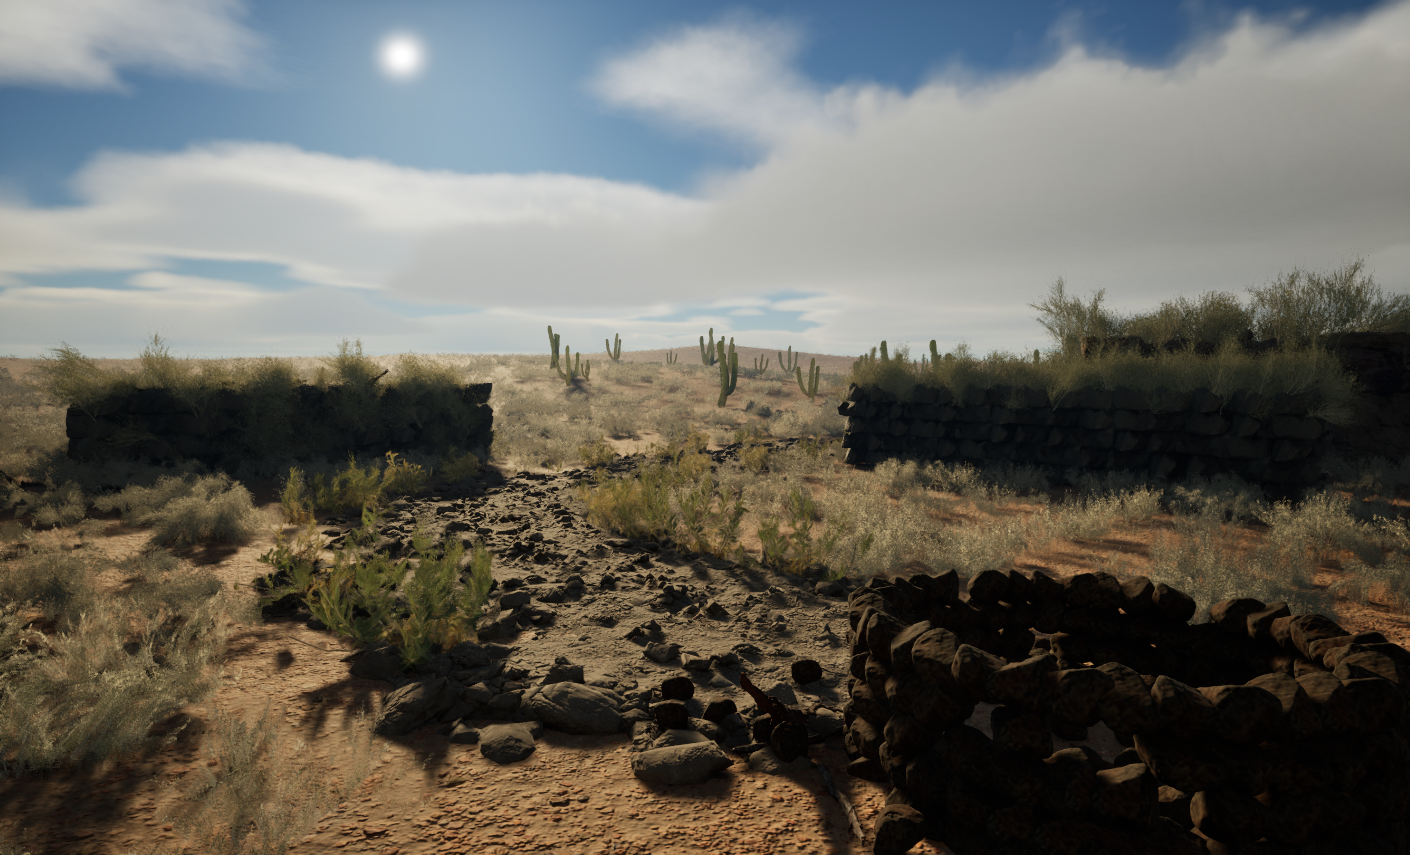 Desert scene in UE5 made with trueSKY